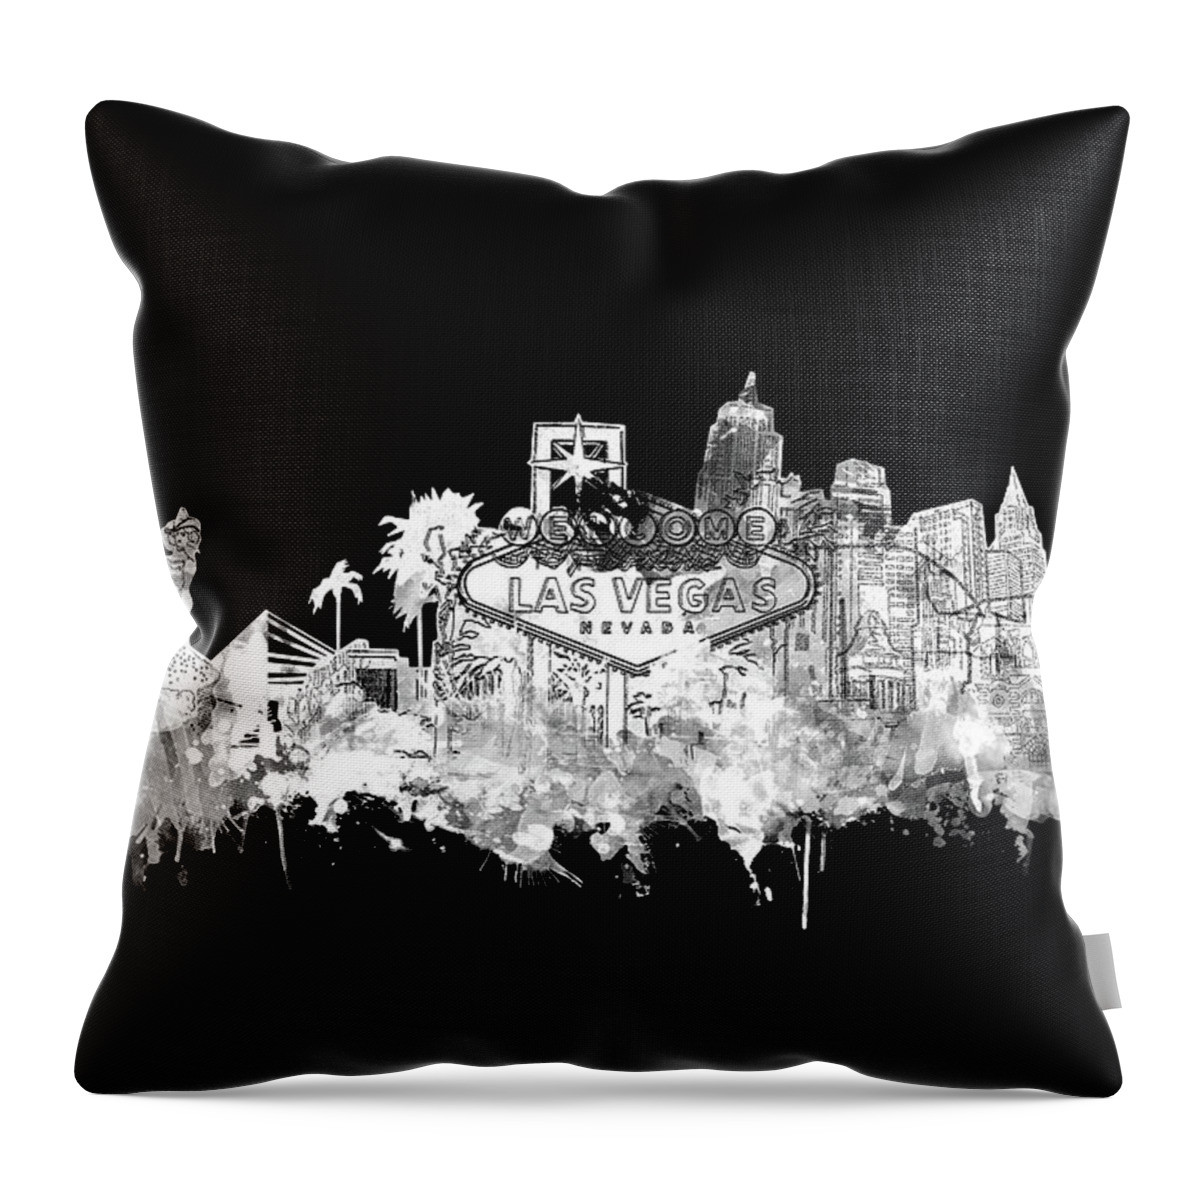 Las Vegas Throw Pillow featuring the digital art Las Vegas Skyline Black by Bekim M